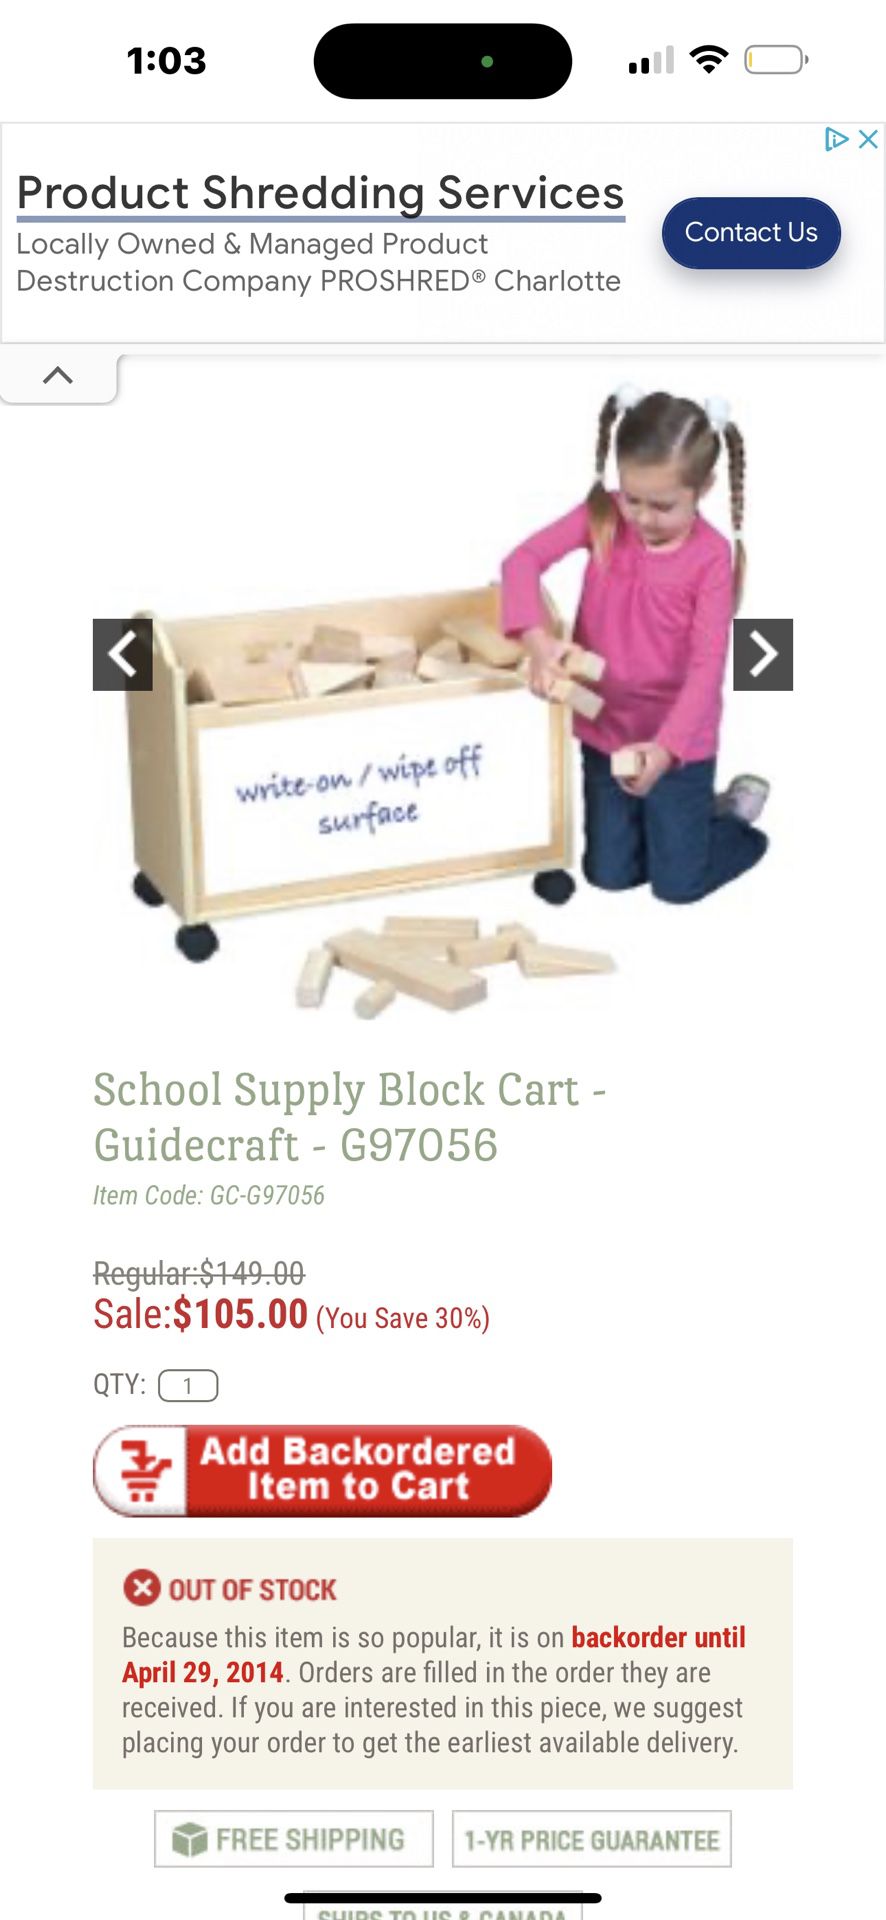 School Supply Block Cart - Guidecraft - G97056 Nwt